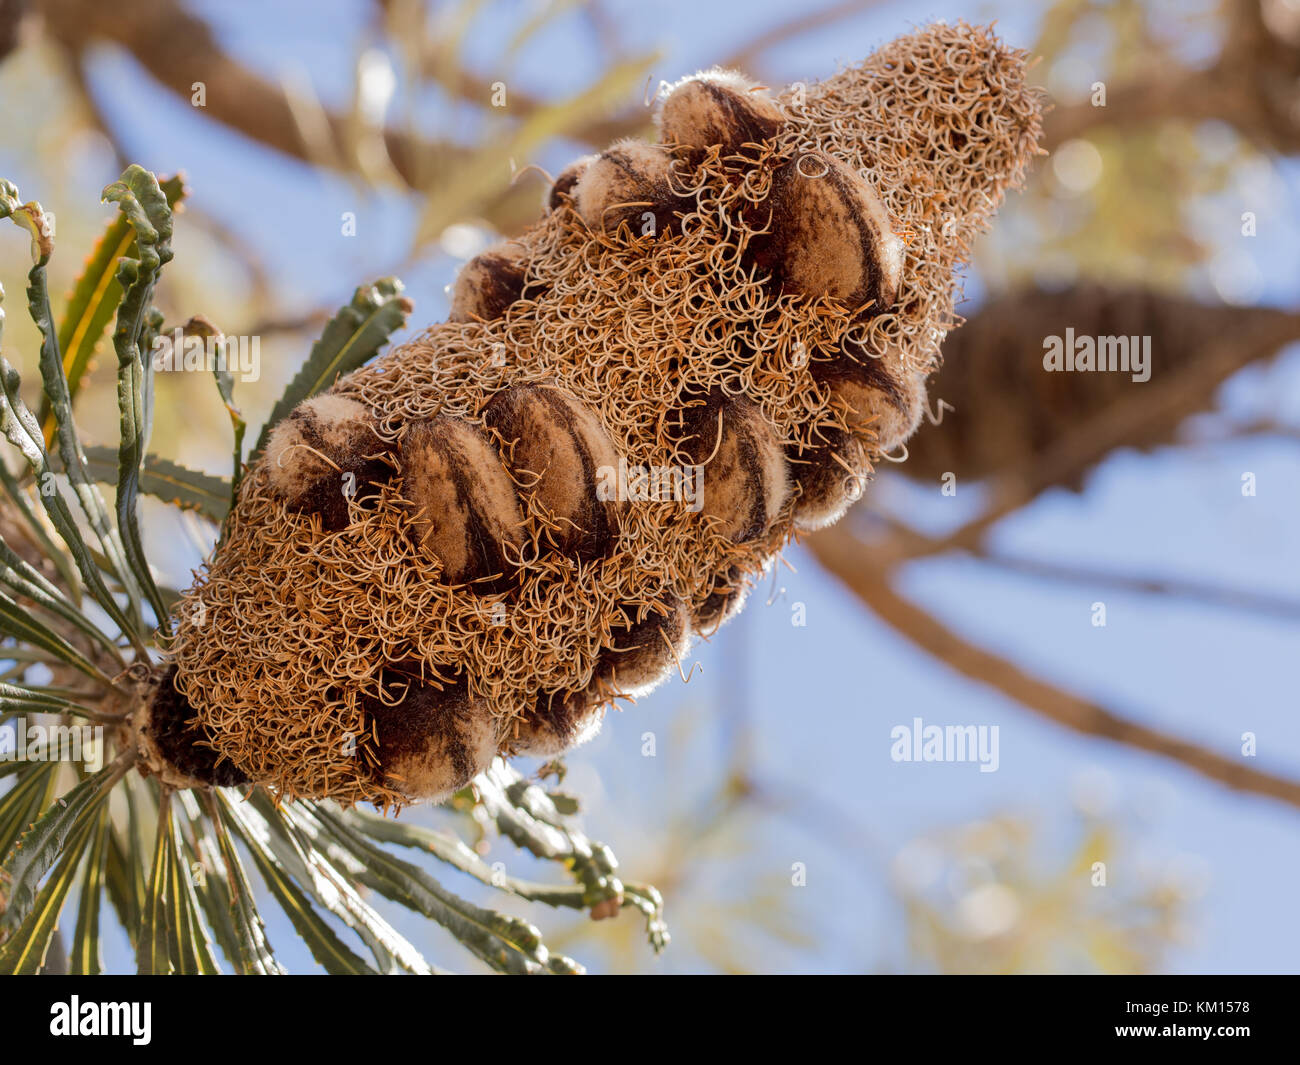 Banksia cone or seed pod, Australia Stock Photo